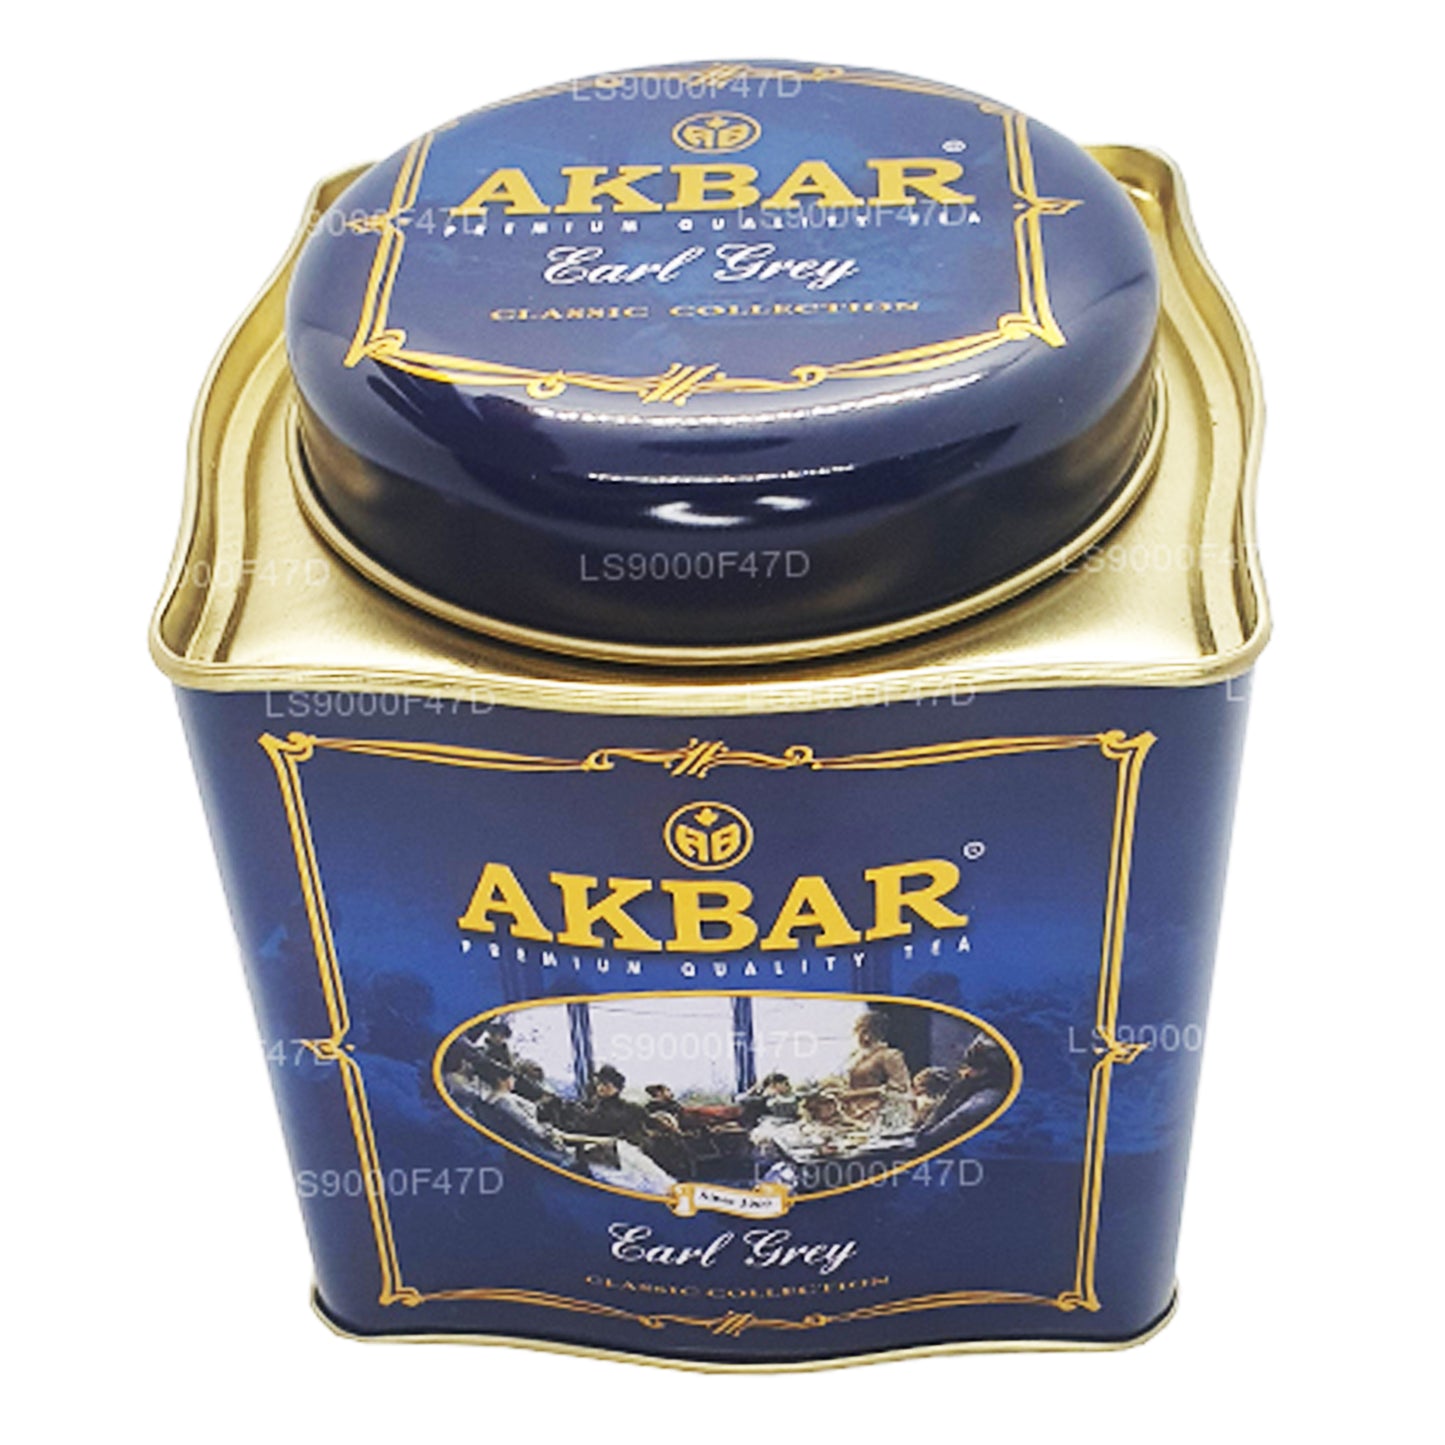 Akbar Classic Earl Grey Leaf Te (250 g) Dåse